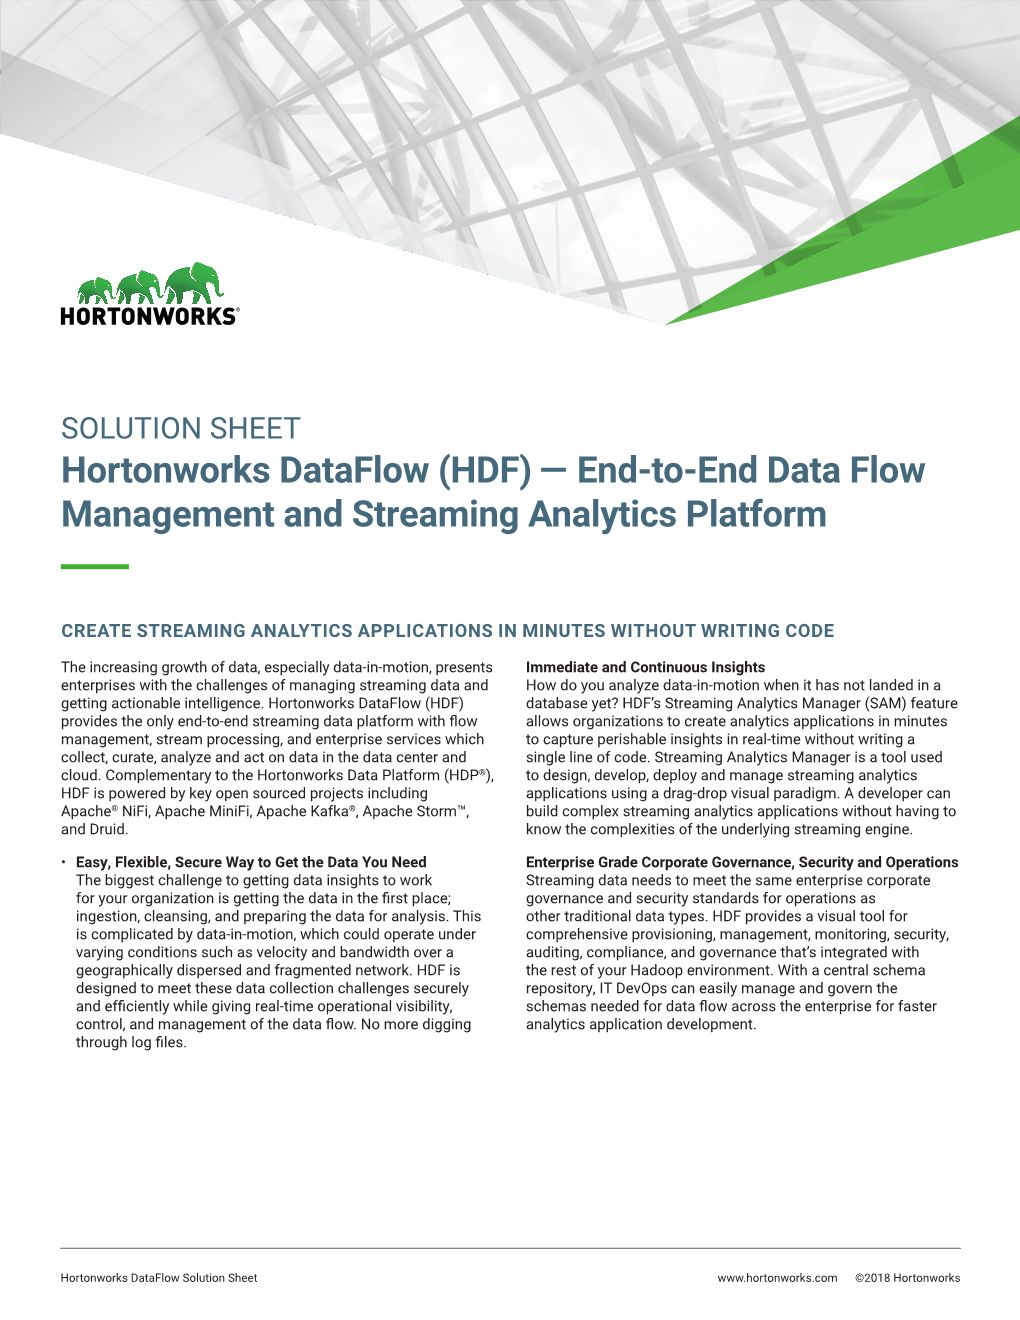 Hortonworks Dataflow (HDF) — End-To-End Data Flow Management and Streaming Analytics Platform